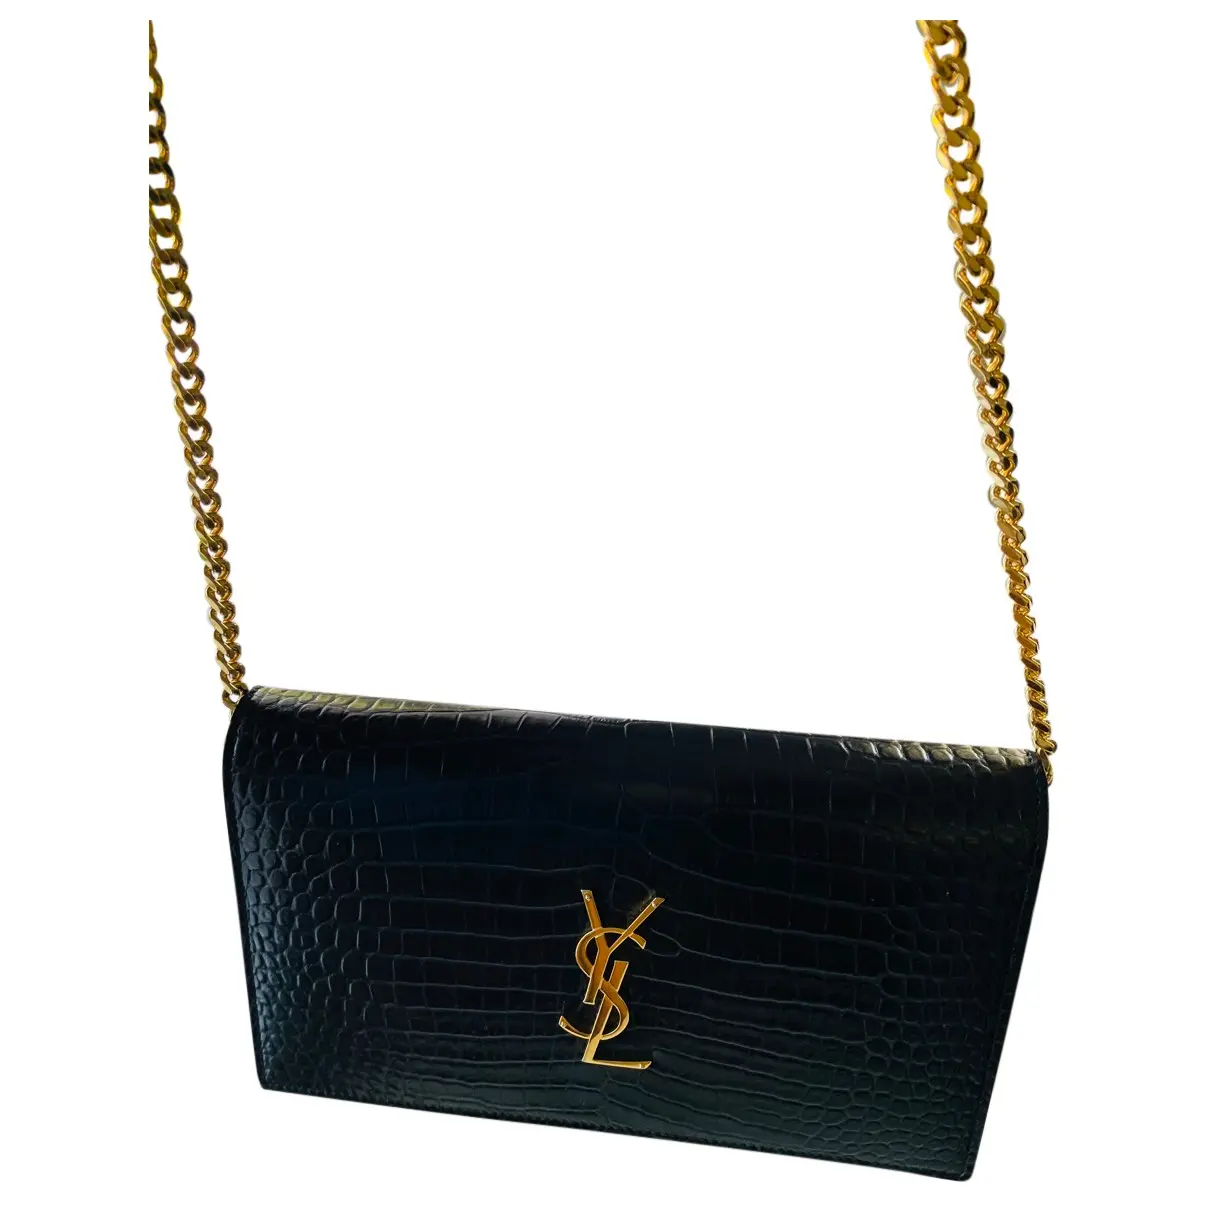 Kate monogramme leather bag Saint Laurent